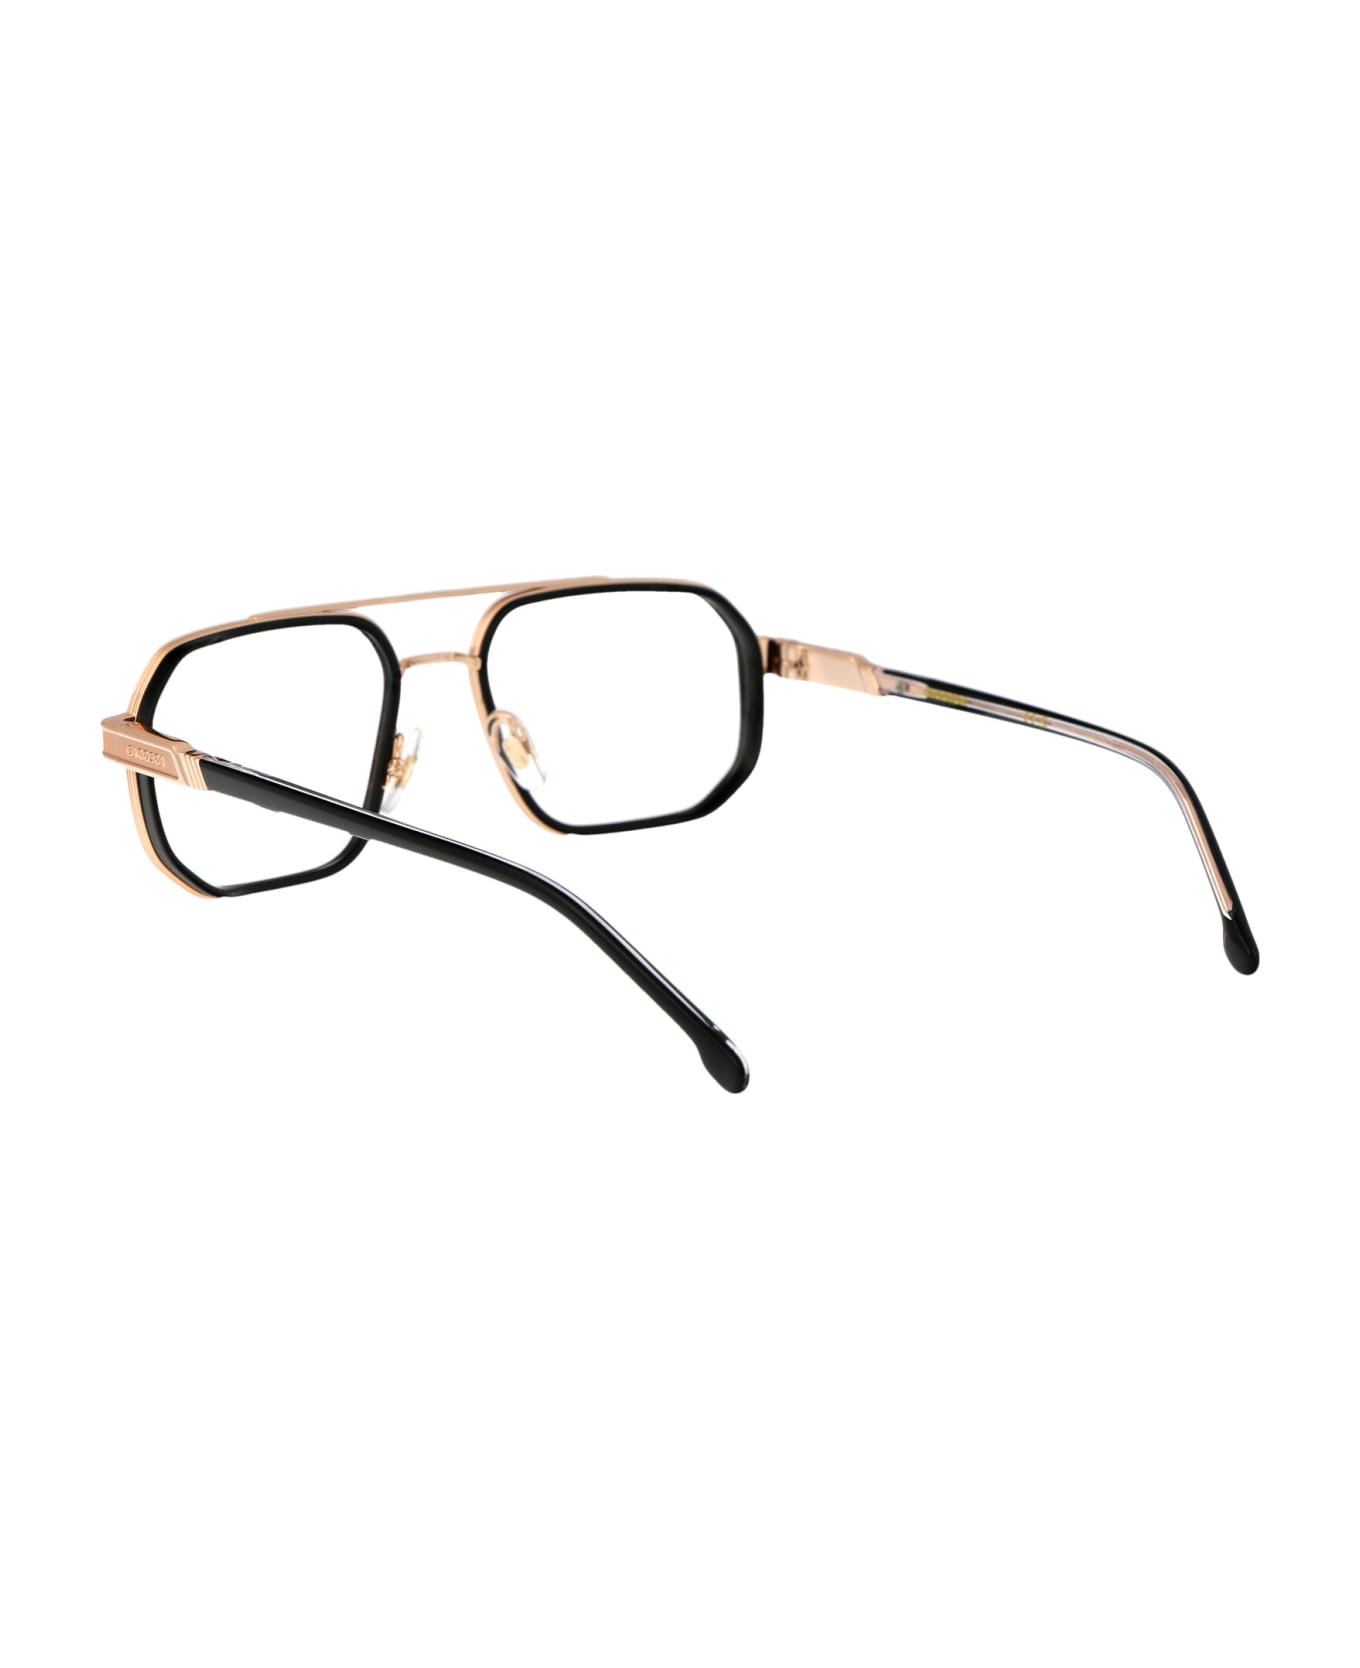 Carrera 1137 Glasses - 001 YELL GOLD